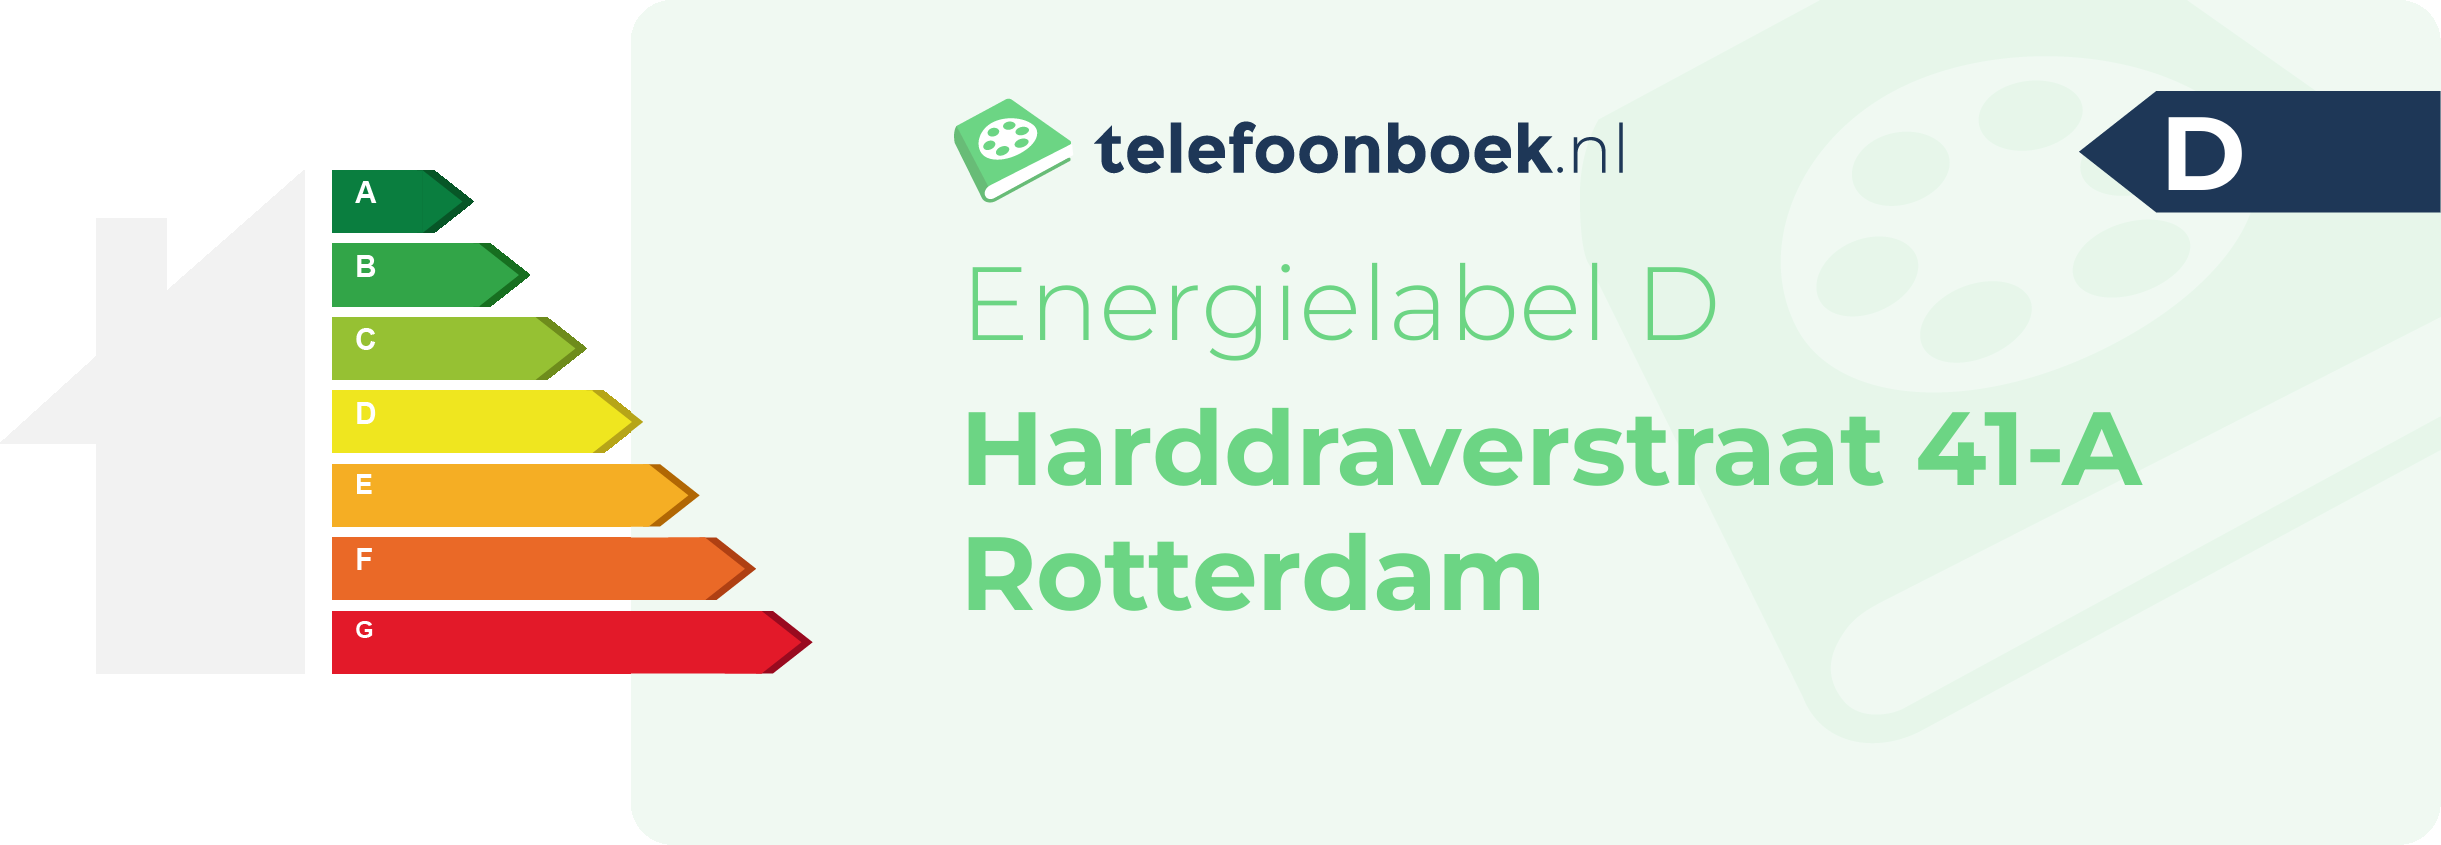 Energielabel Harddraverstraat 41-A Rotterdam